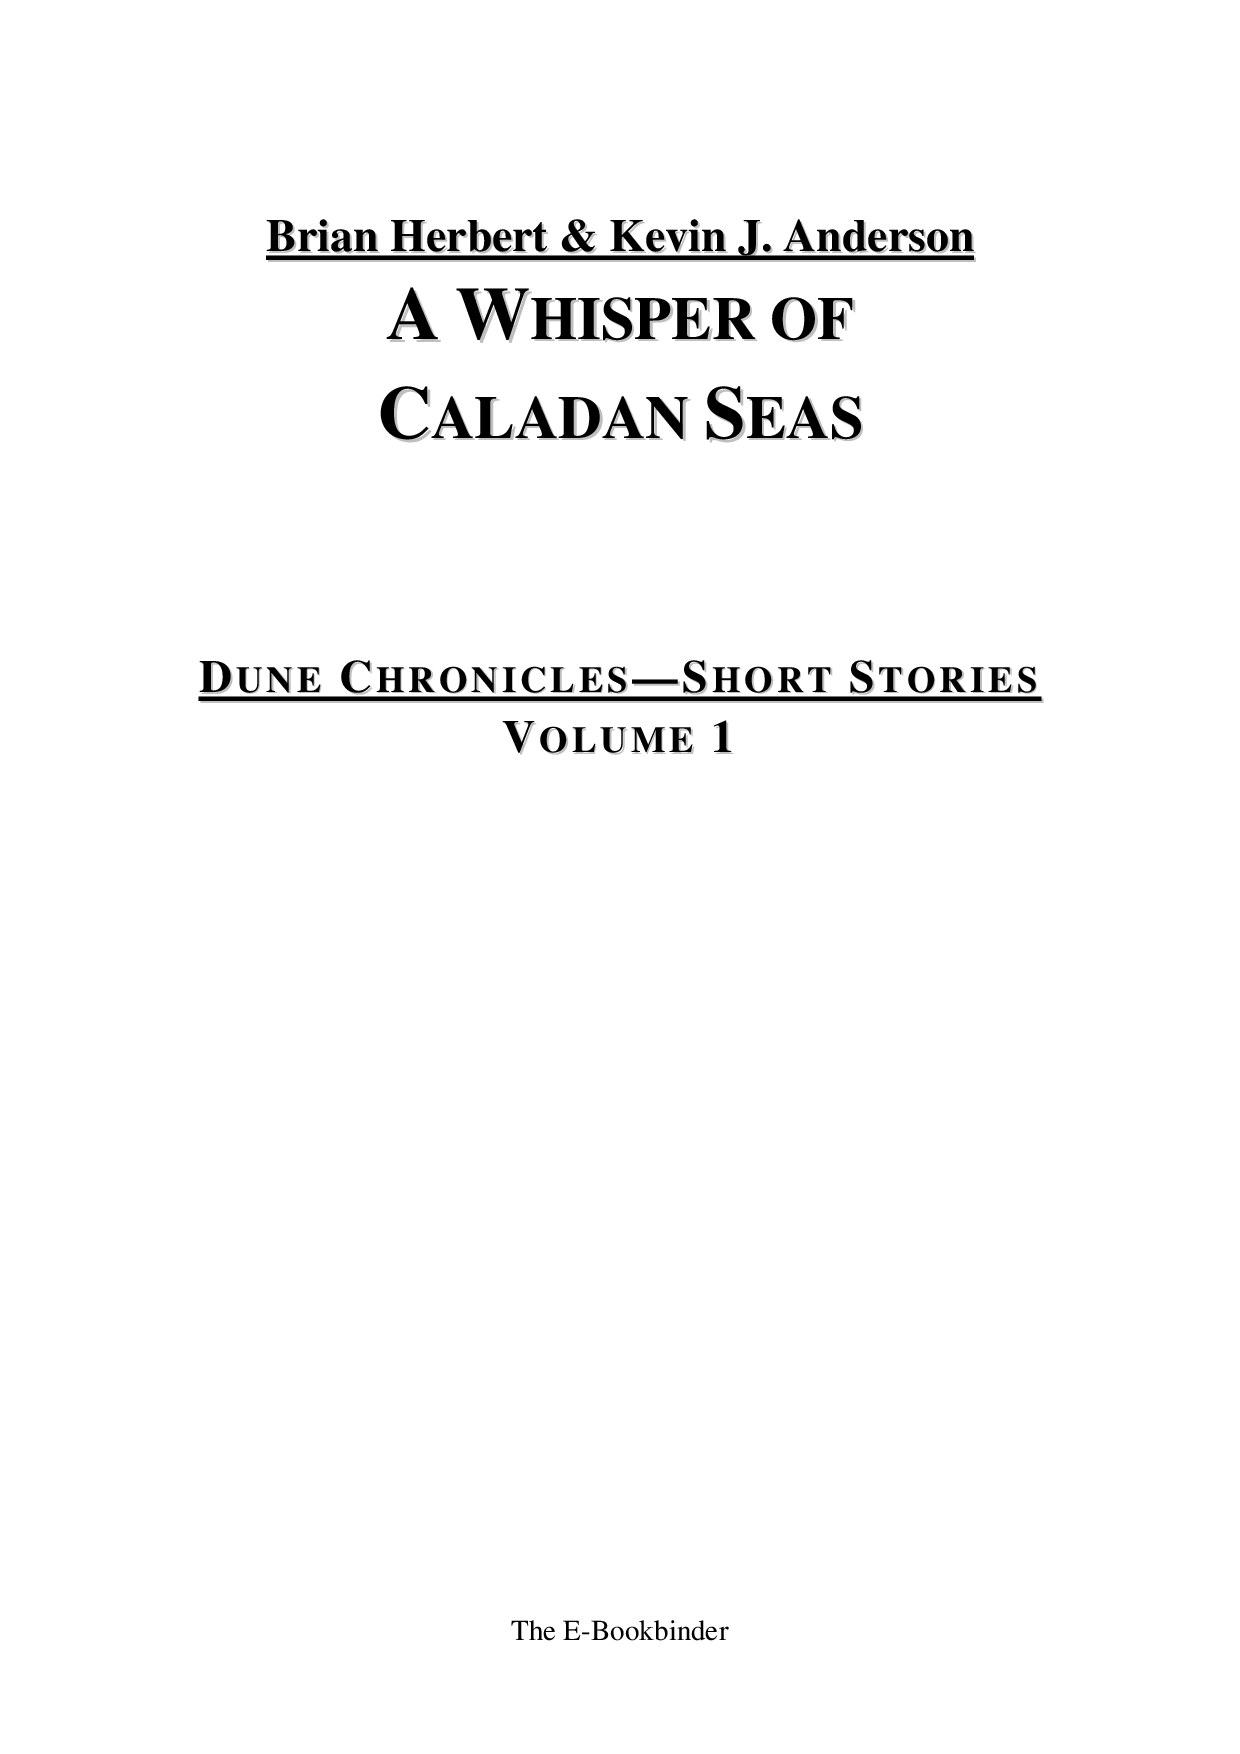 Brian Herbert & Kevin J. Anderson - Dune Chronicles SS 01 - A Whisper of Caladan Seas